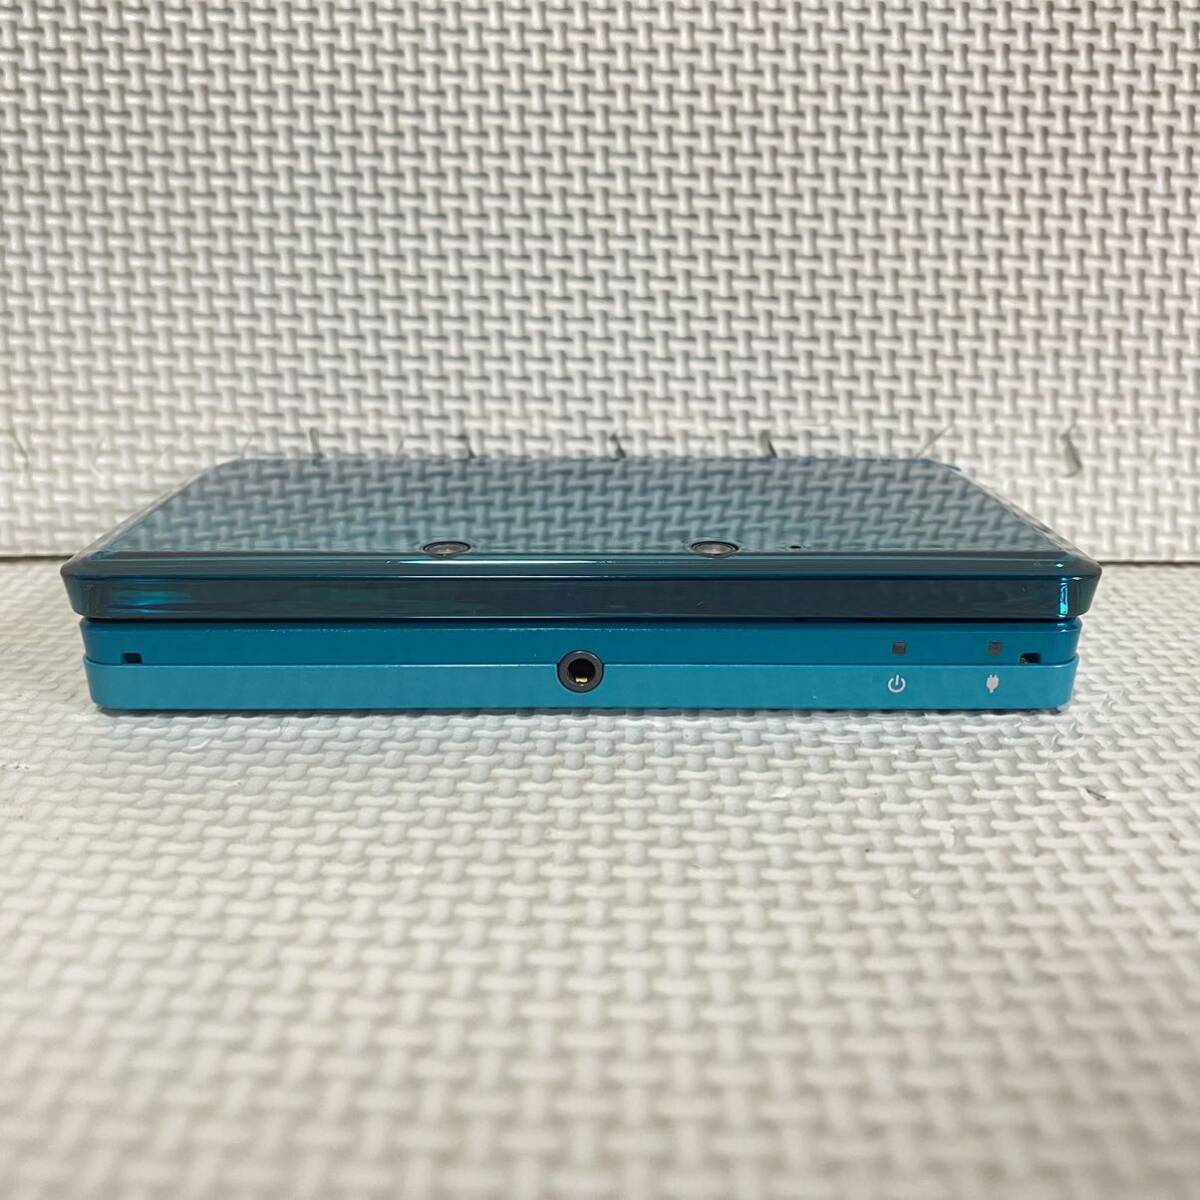 1 jpy * Nintendo 3DS aqua blue Nintendo nintendo CTR-001(JPN) charger AC adapter SD memory 4GB touch pen blue emerald green 